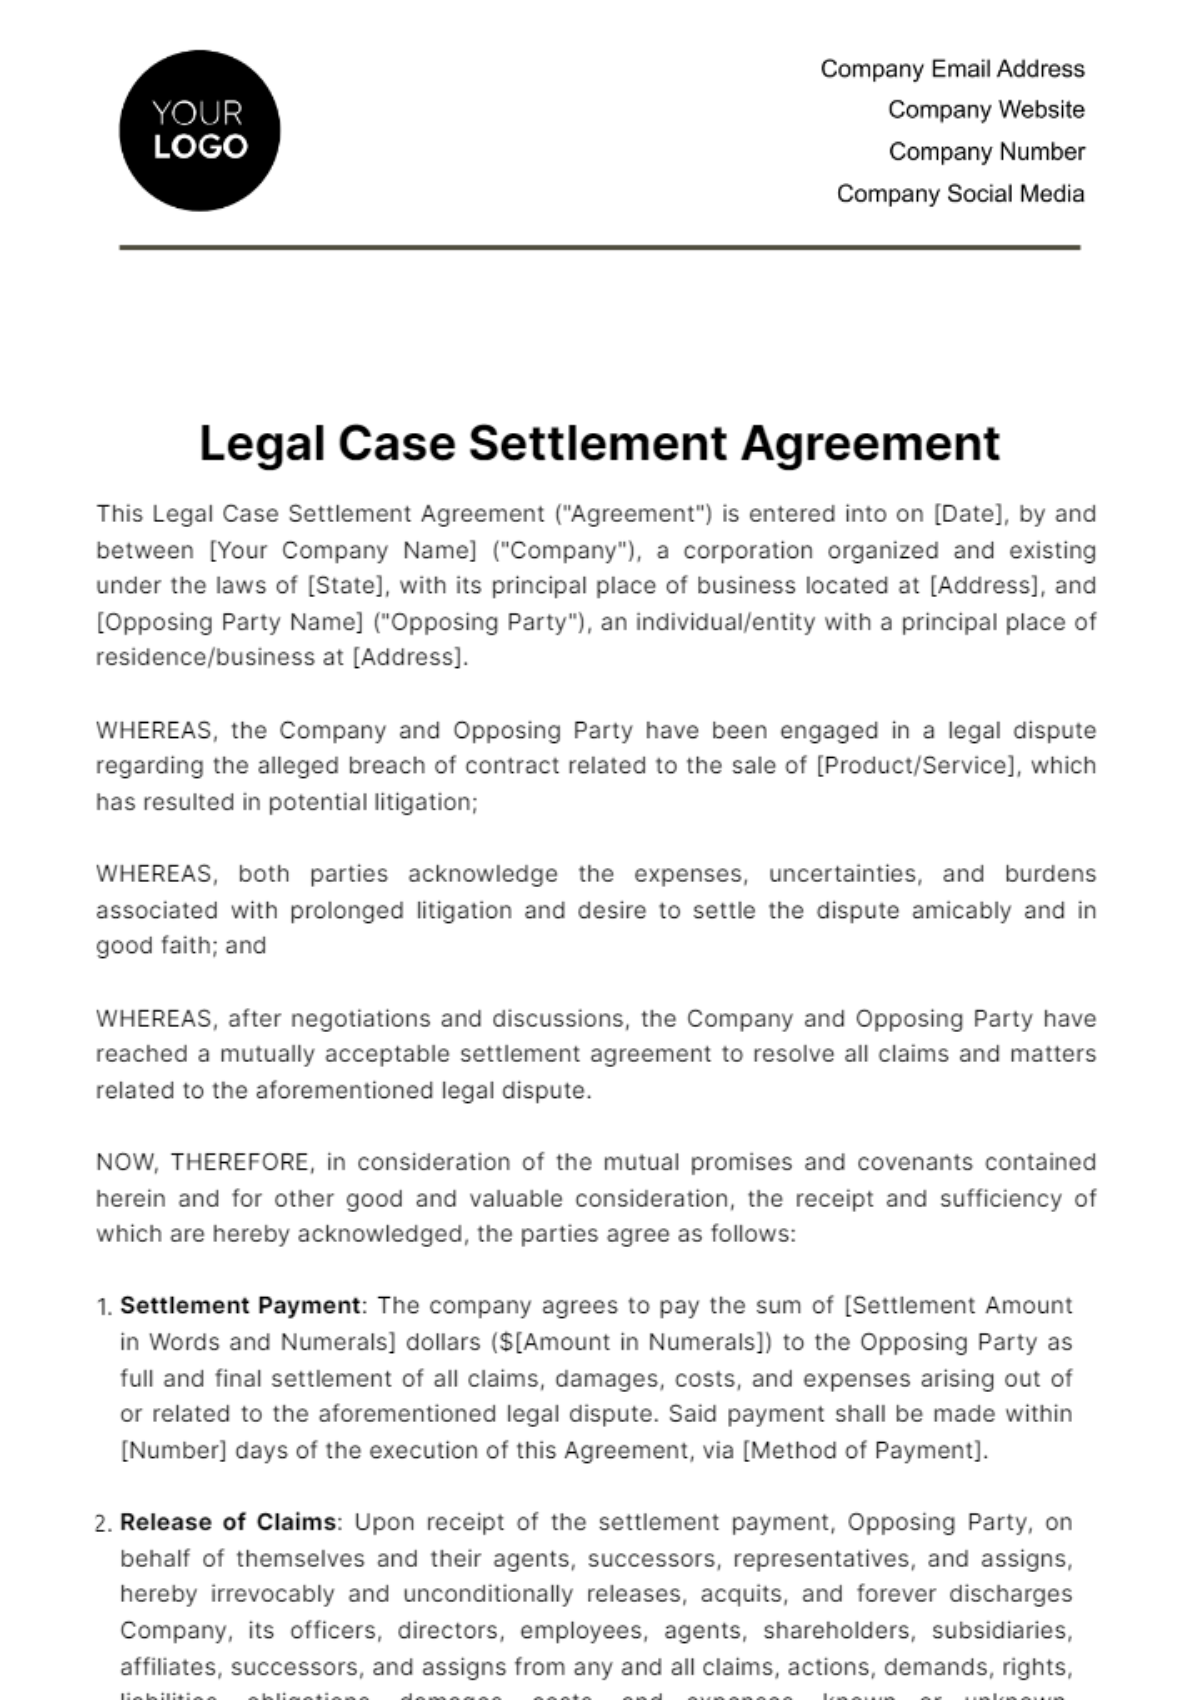 Free Legal Case Settlement Agreement Template